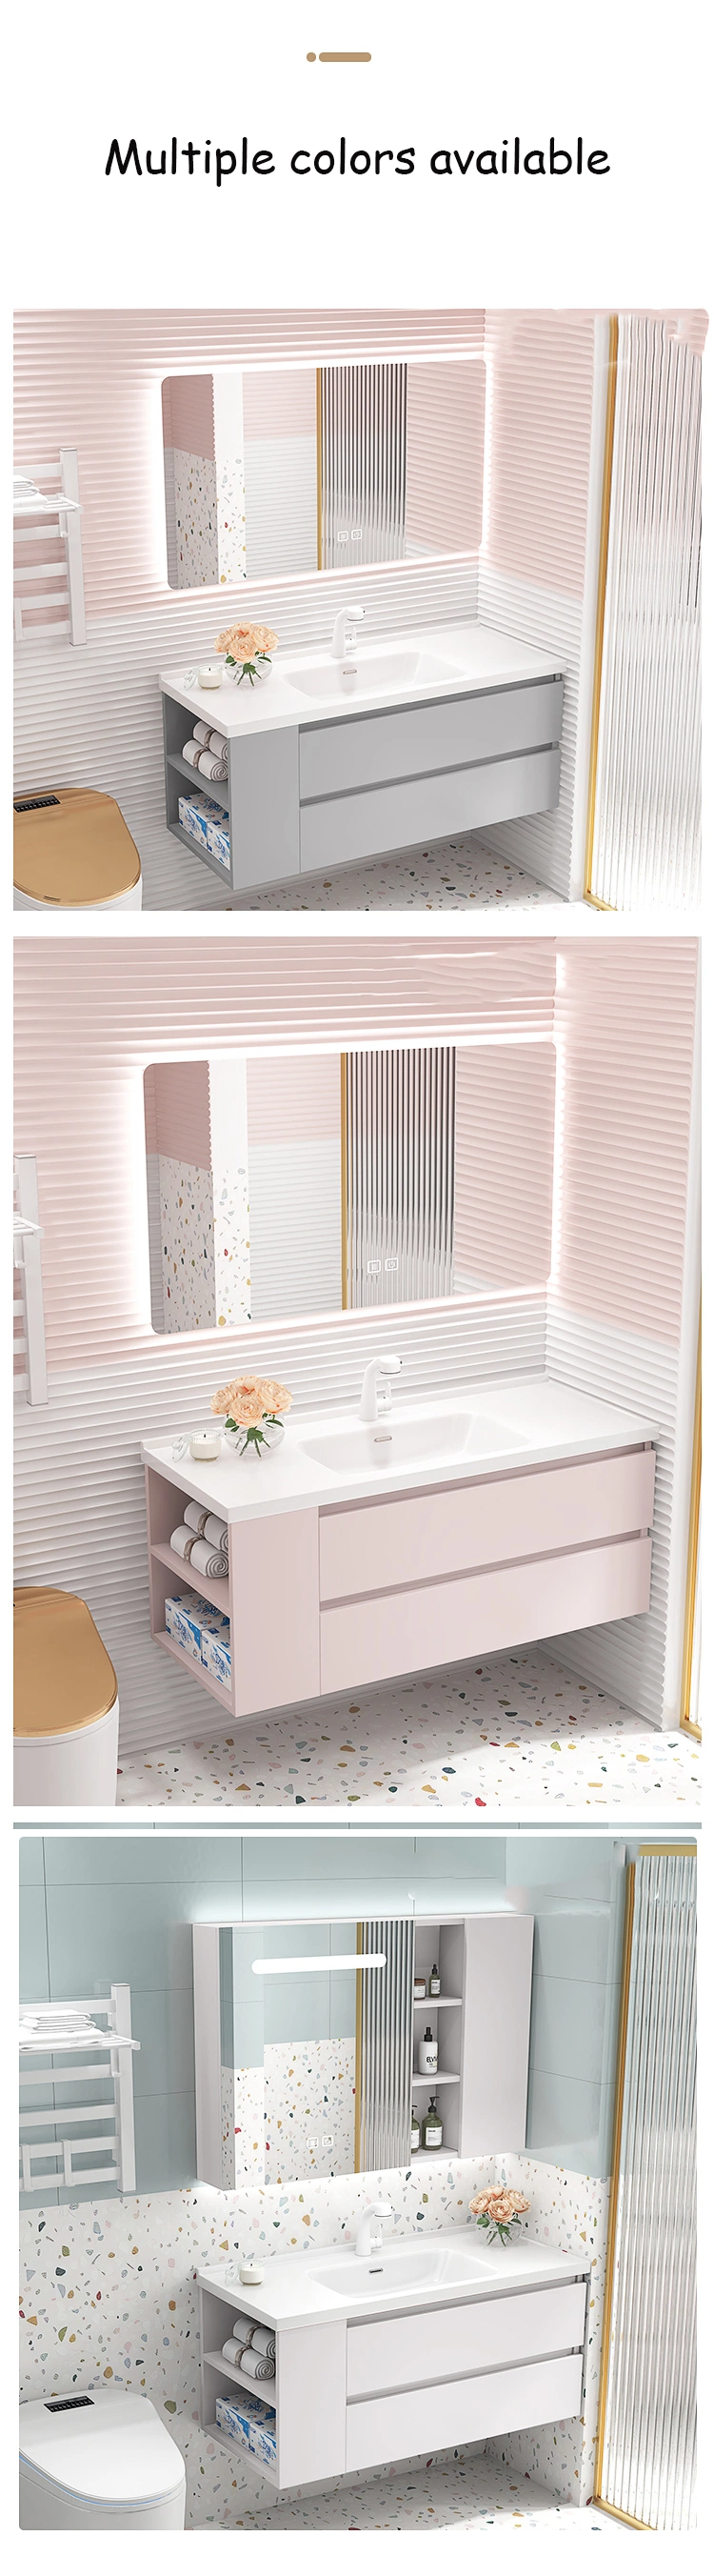 Modern Style Pink Single Bathroom Vanity Factory Customized Washroom Wall Hung Mounted Single Sink Bathroom Furniture